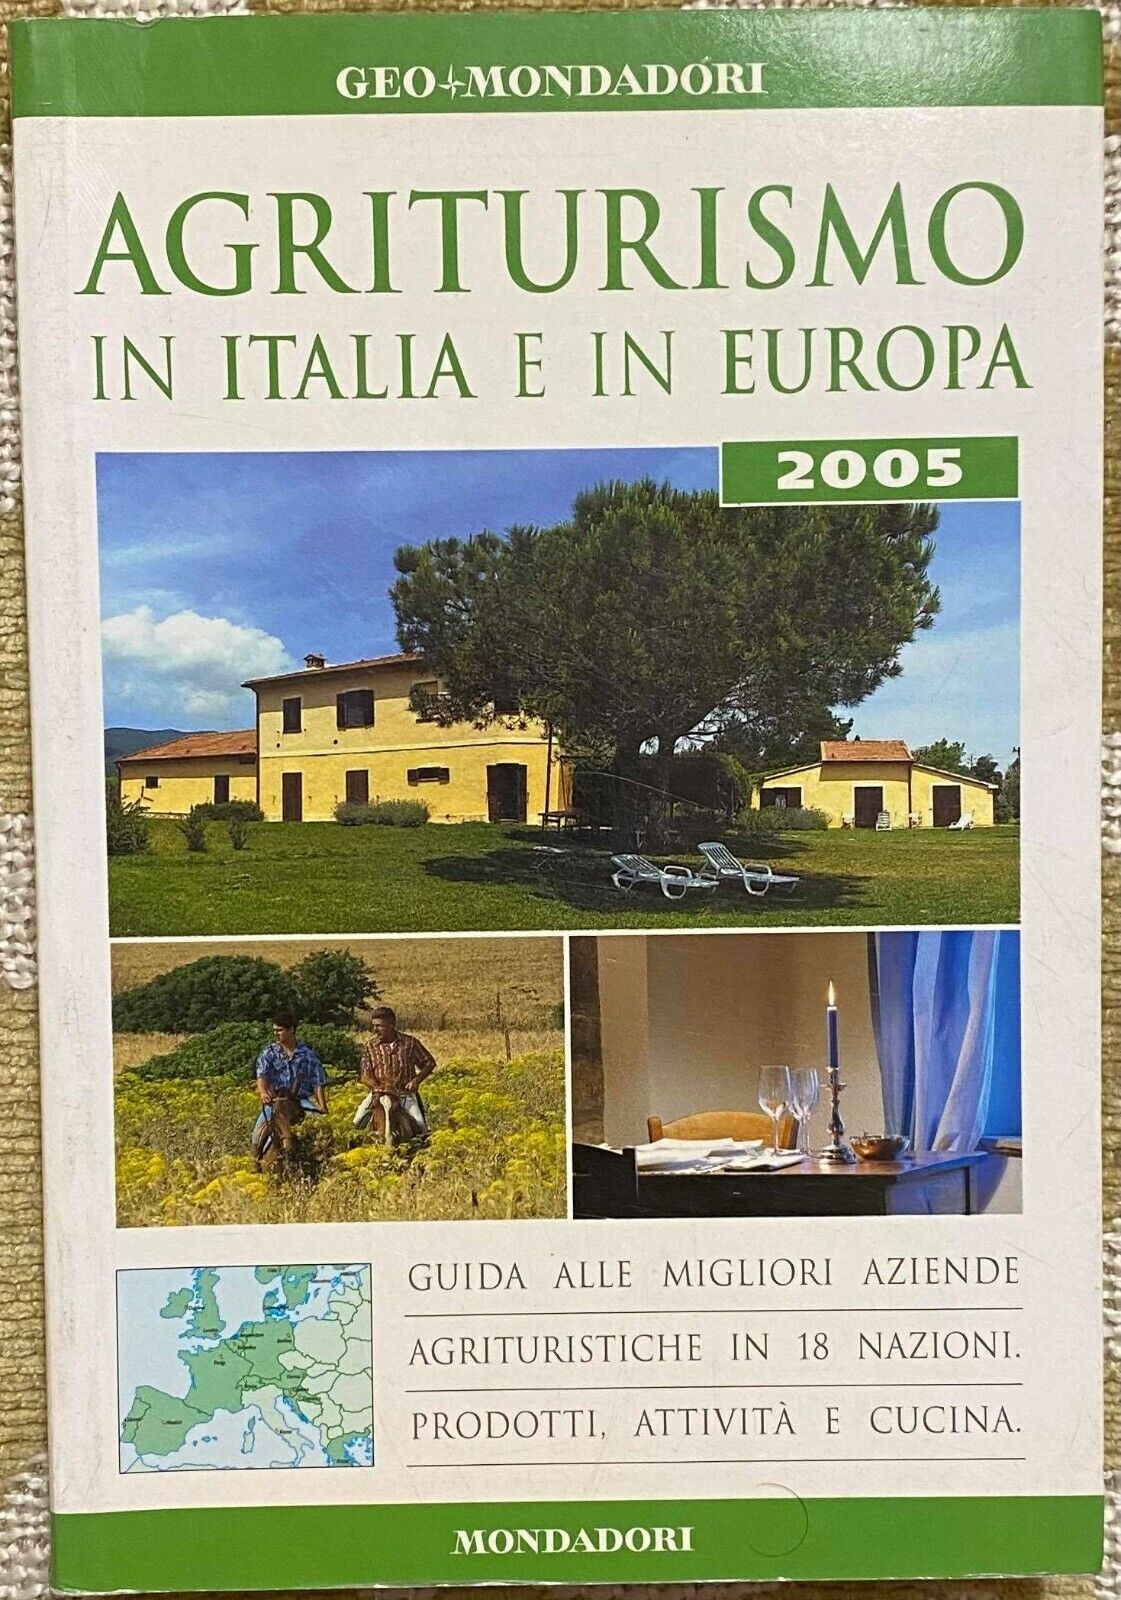 Agriturismo in Italia e in Europa - Aa.Vv. - Mondadori - 2005 - M